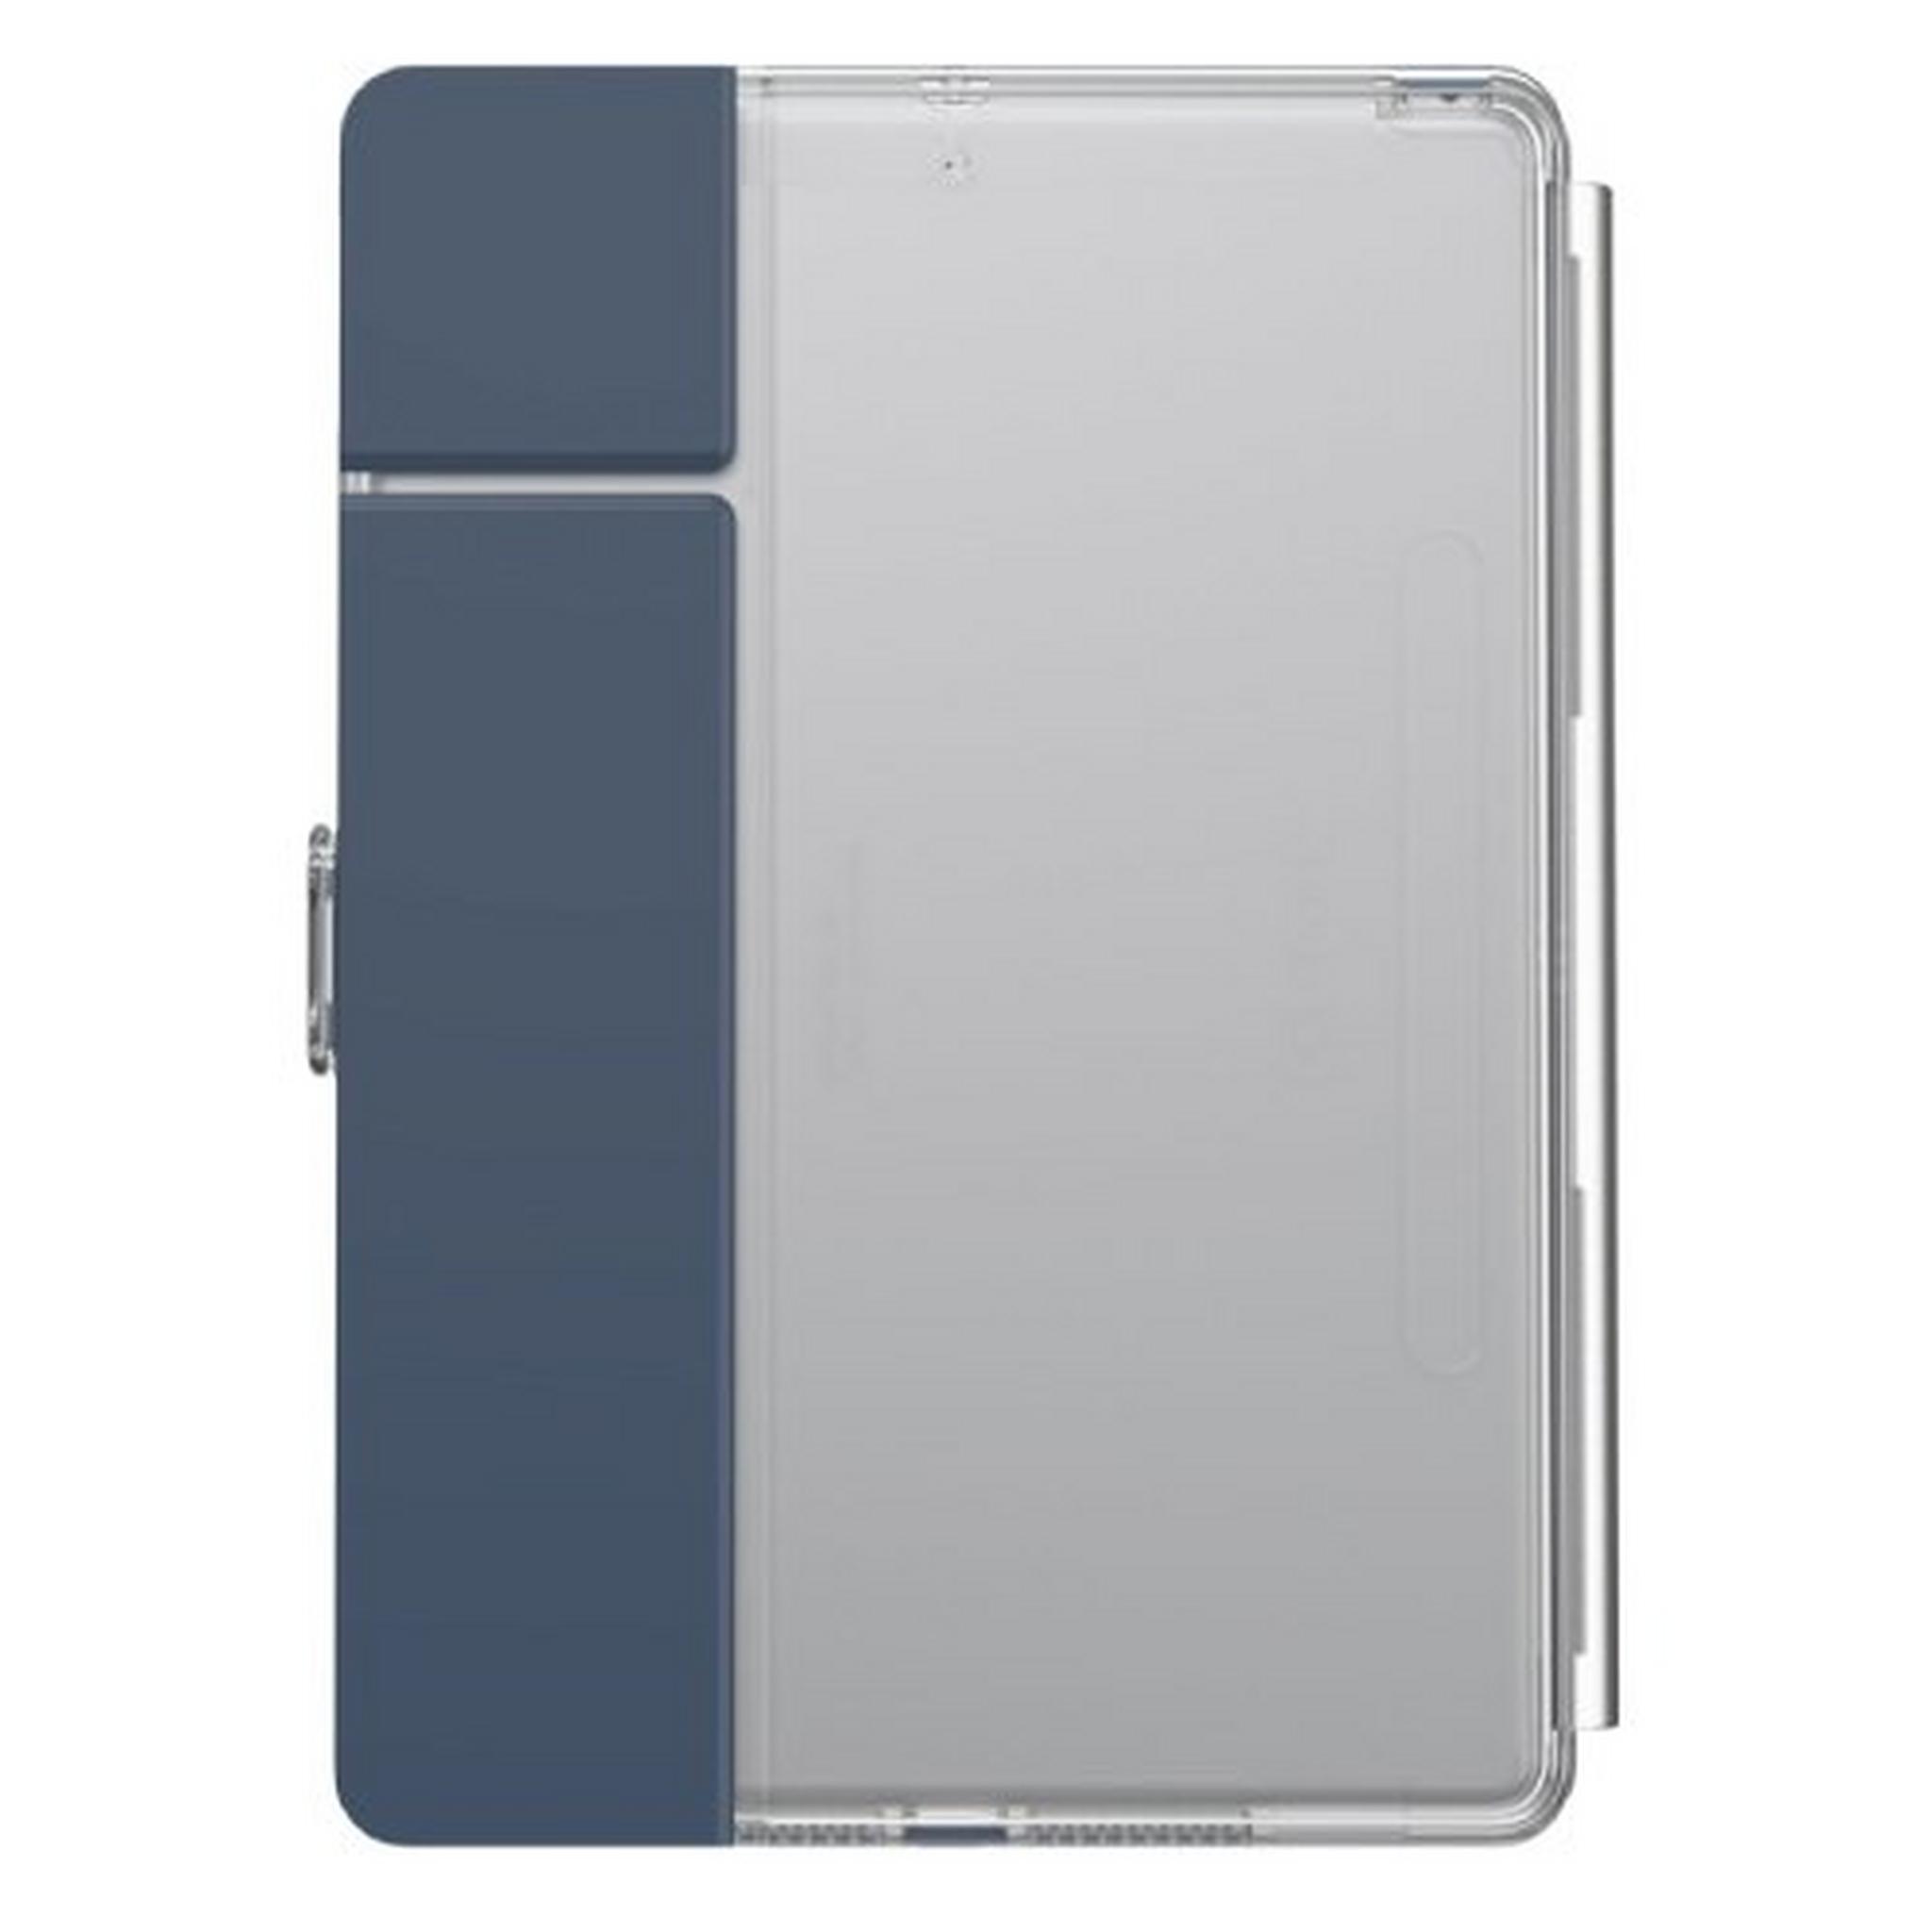 Speck Balance Folio 10.2-inch iPad Case - Navy Blue